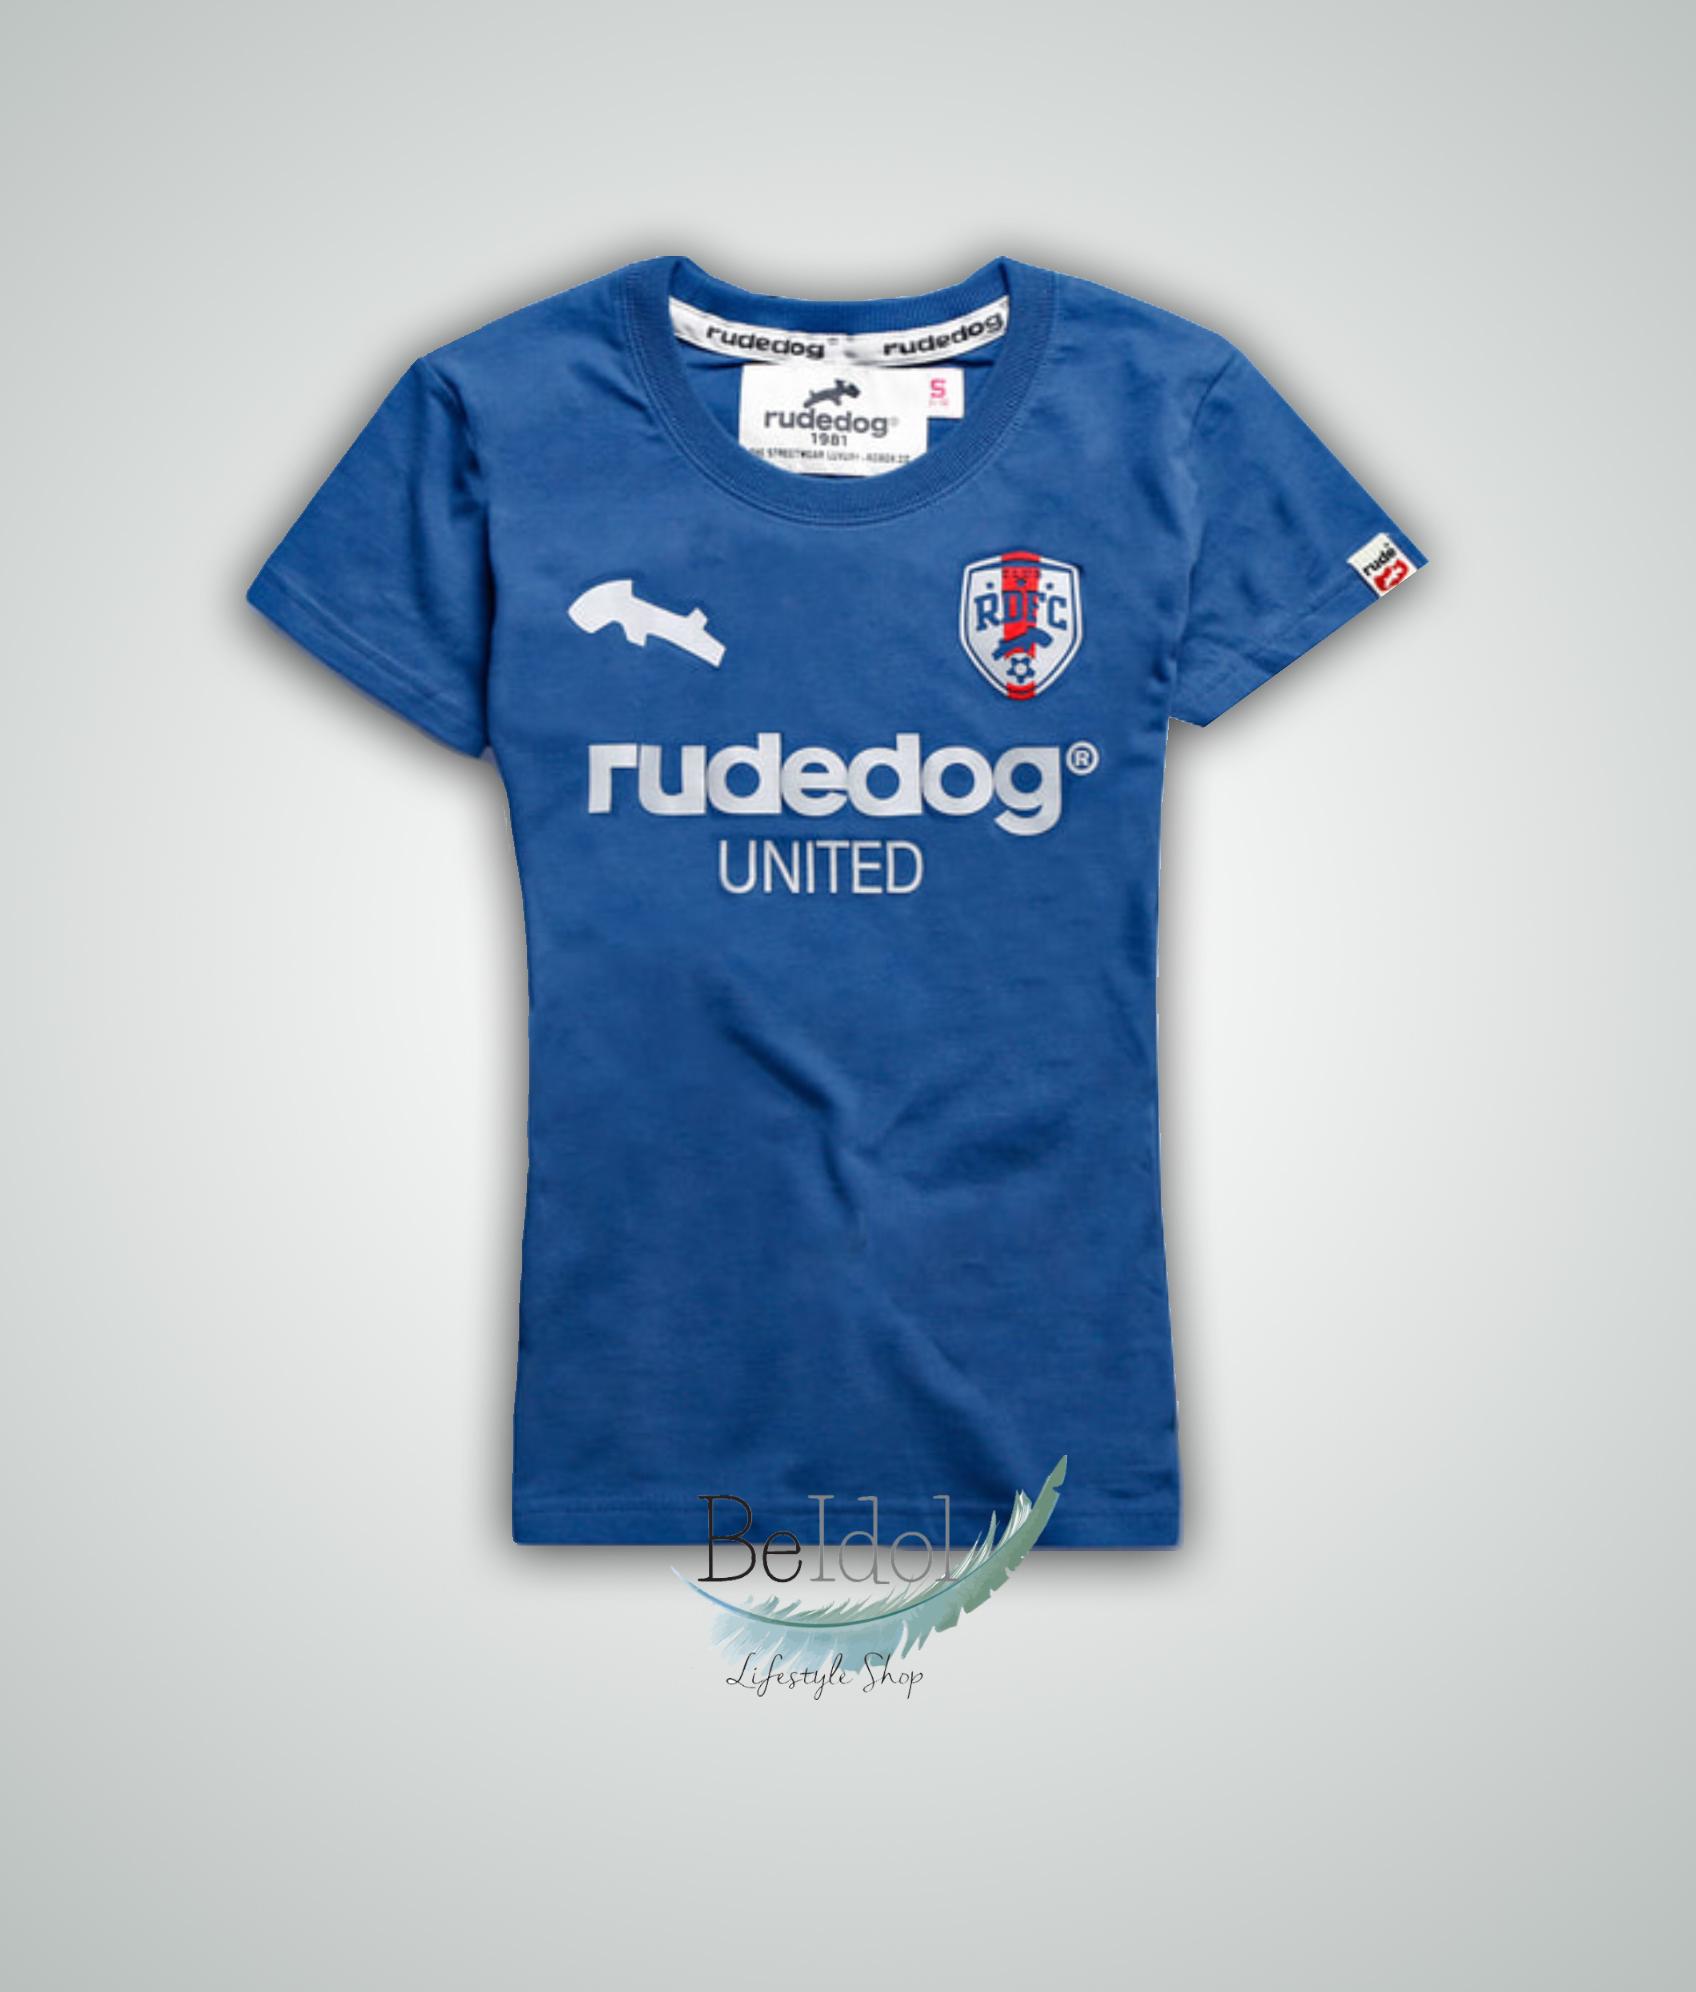 Rudedog เสื้อยืด ผู้หญิง รุ่น United (Women)